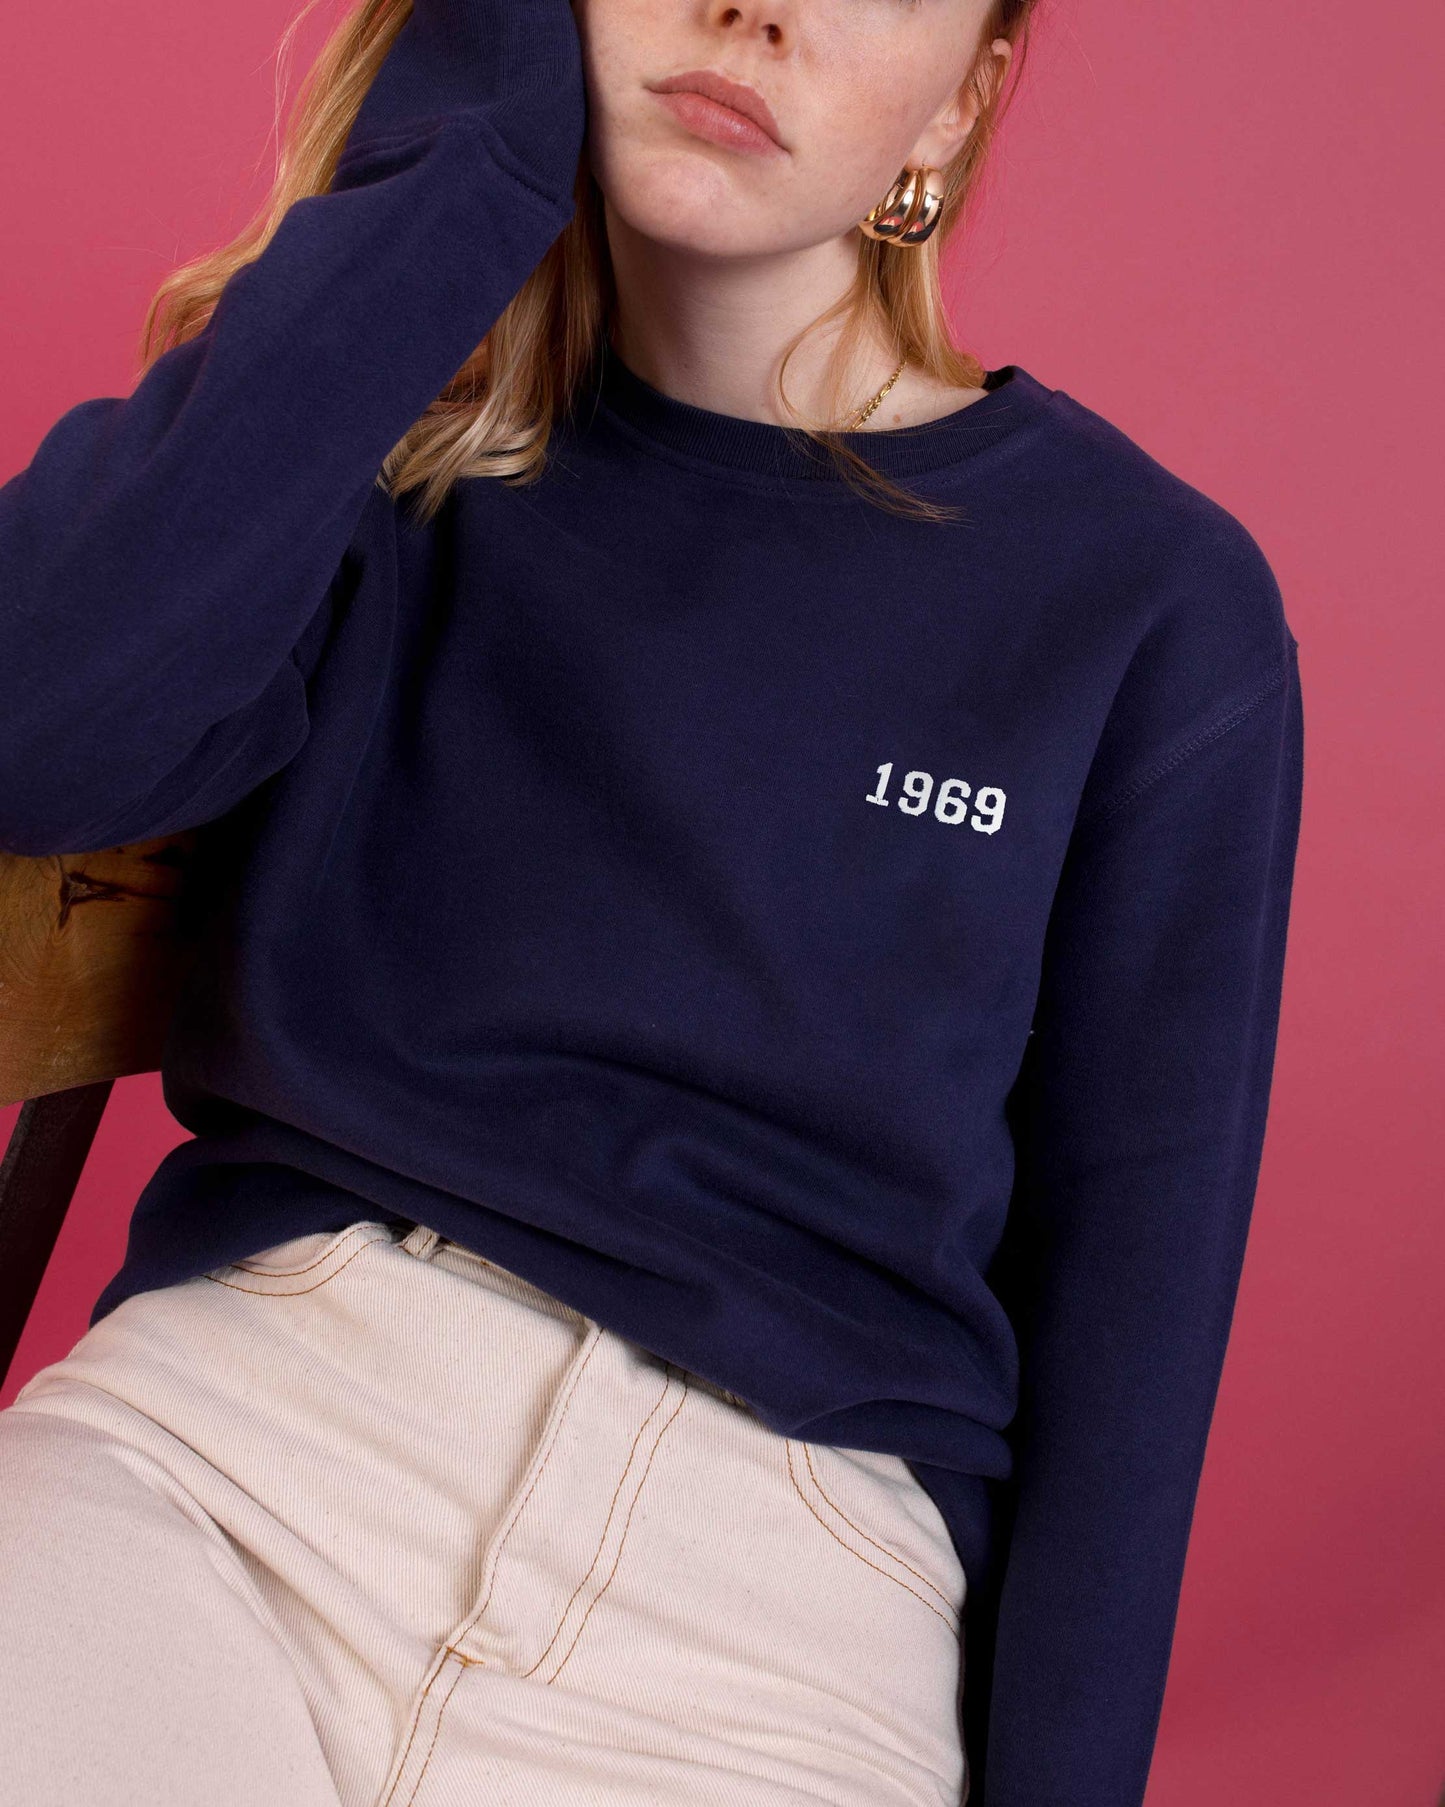 Embroidered Personalised Year Sweatshirt